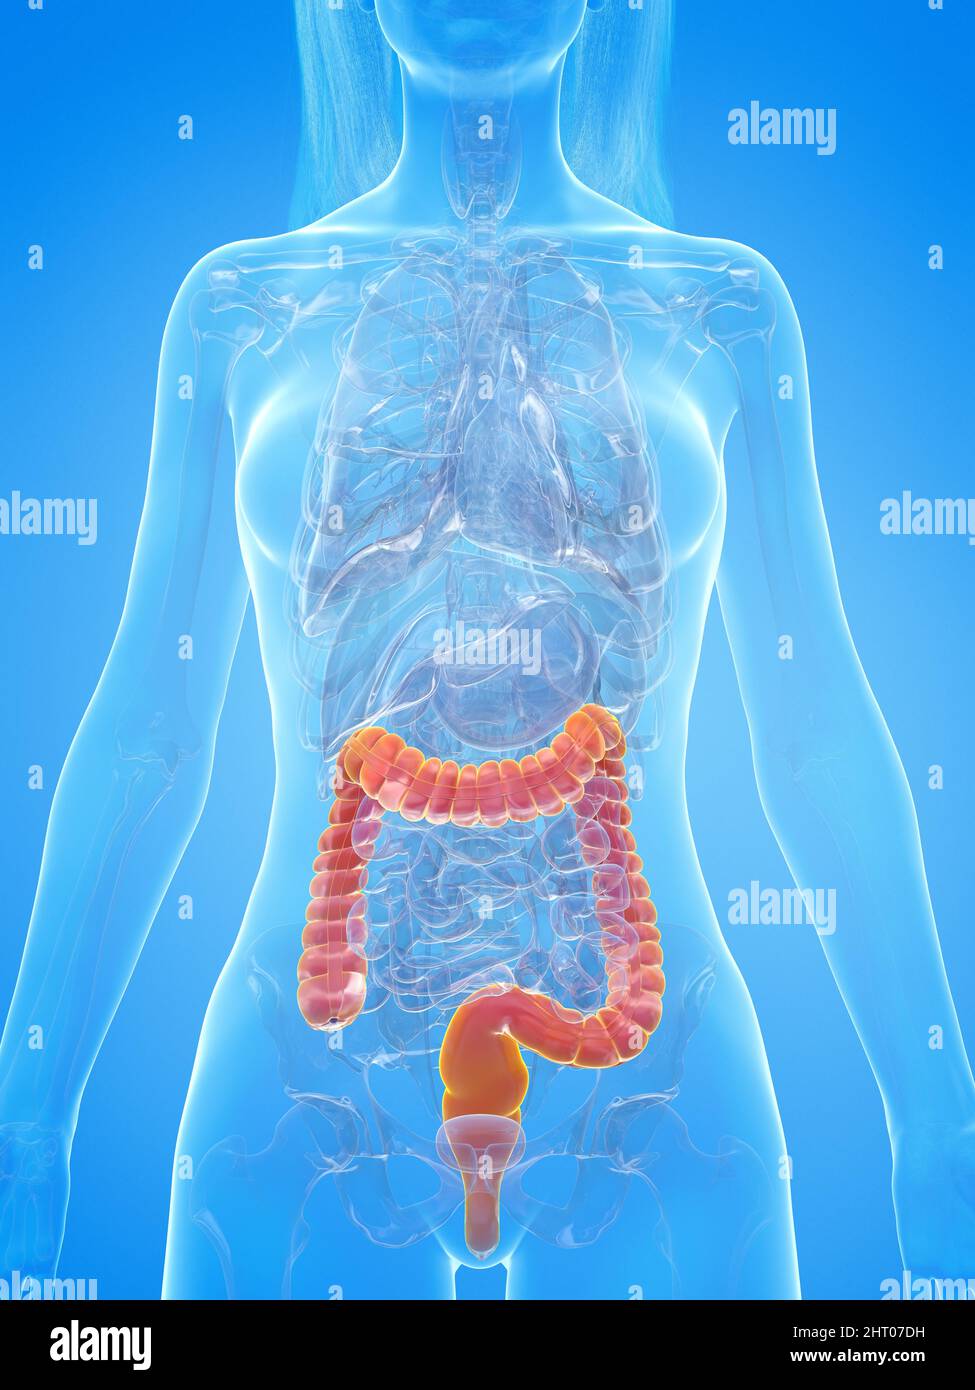 Human colon, illustration Stock Photo